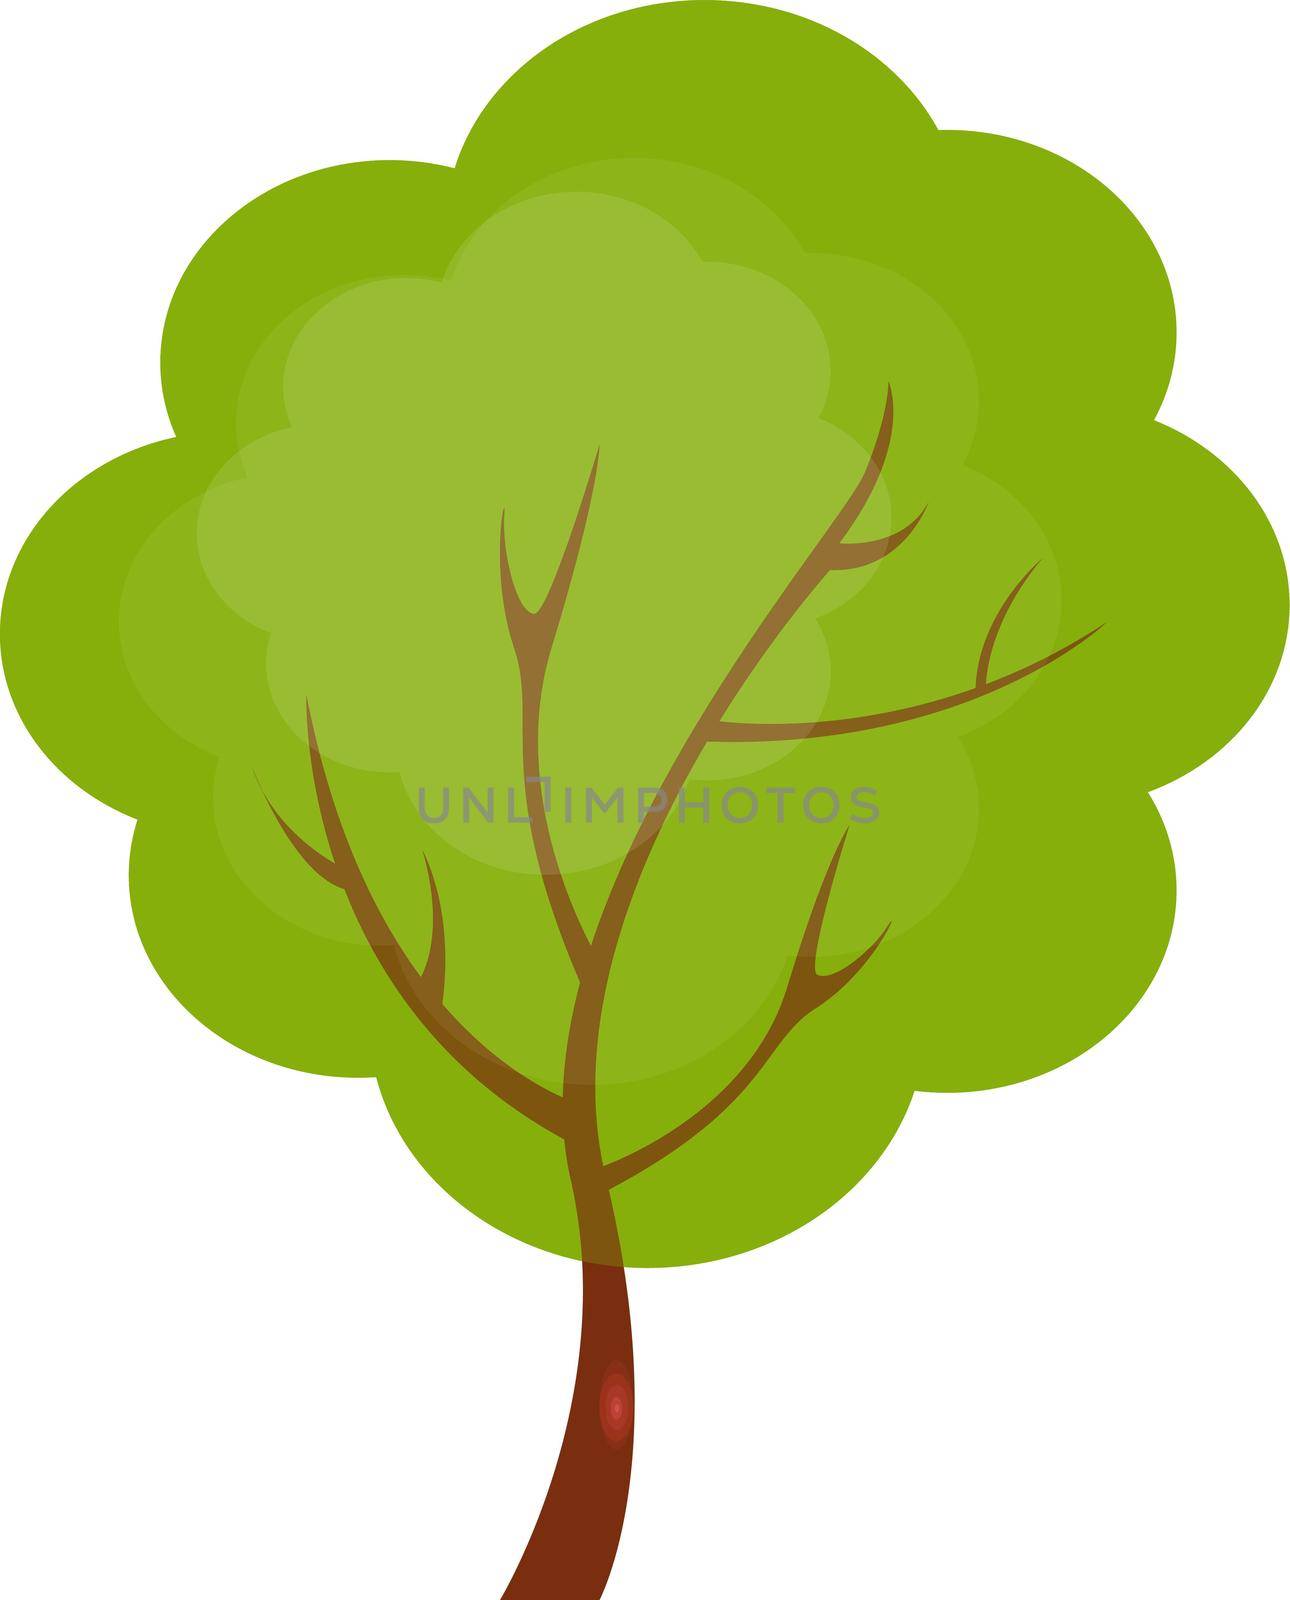 Green tree, illustration, vector on white background.